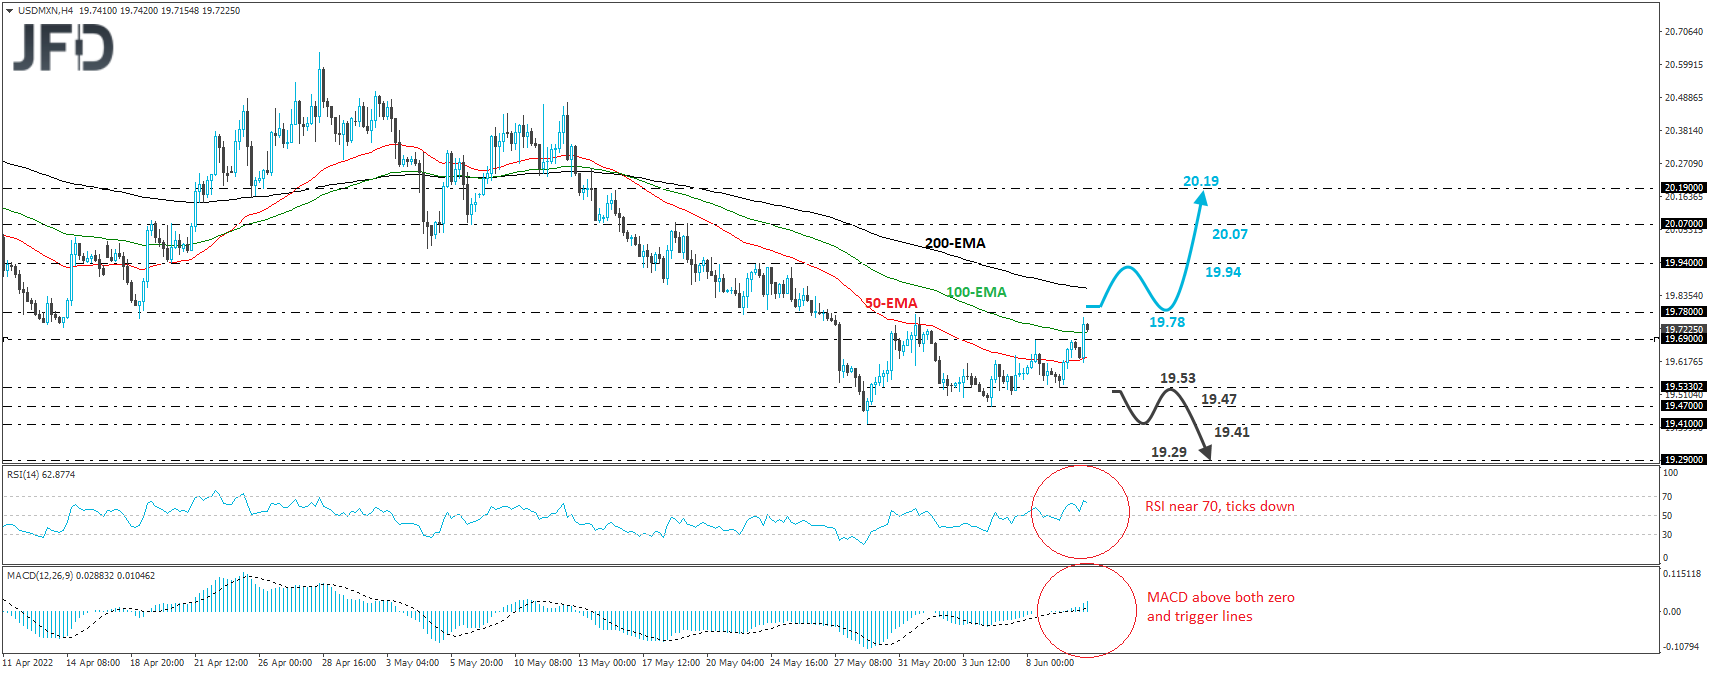 USD/MXN 4-hour chart technical analysis